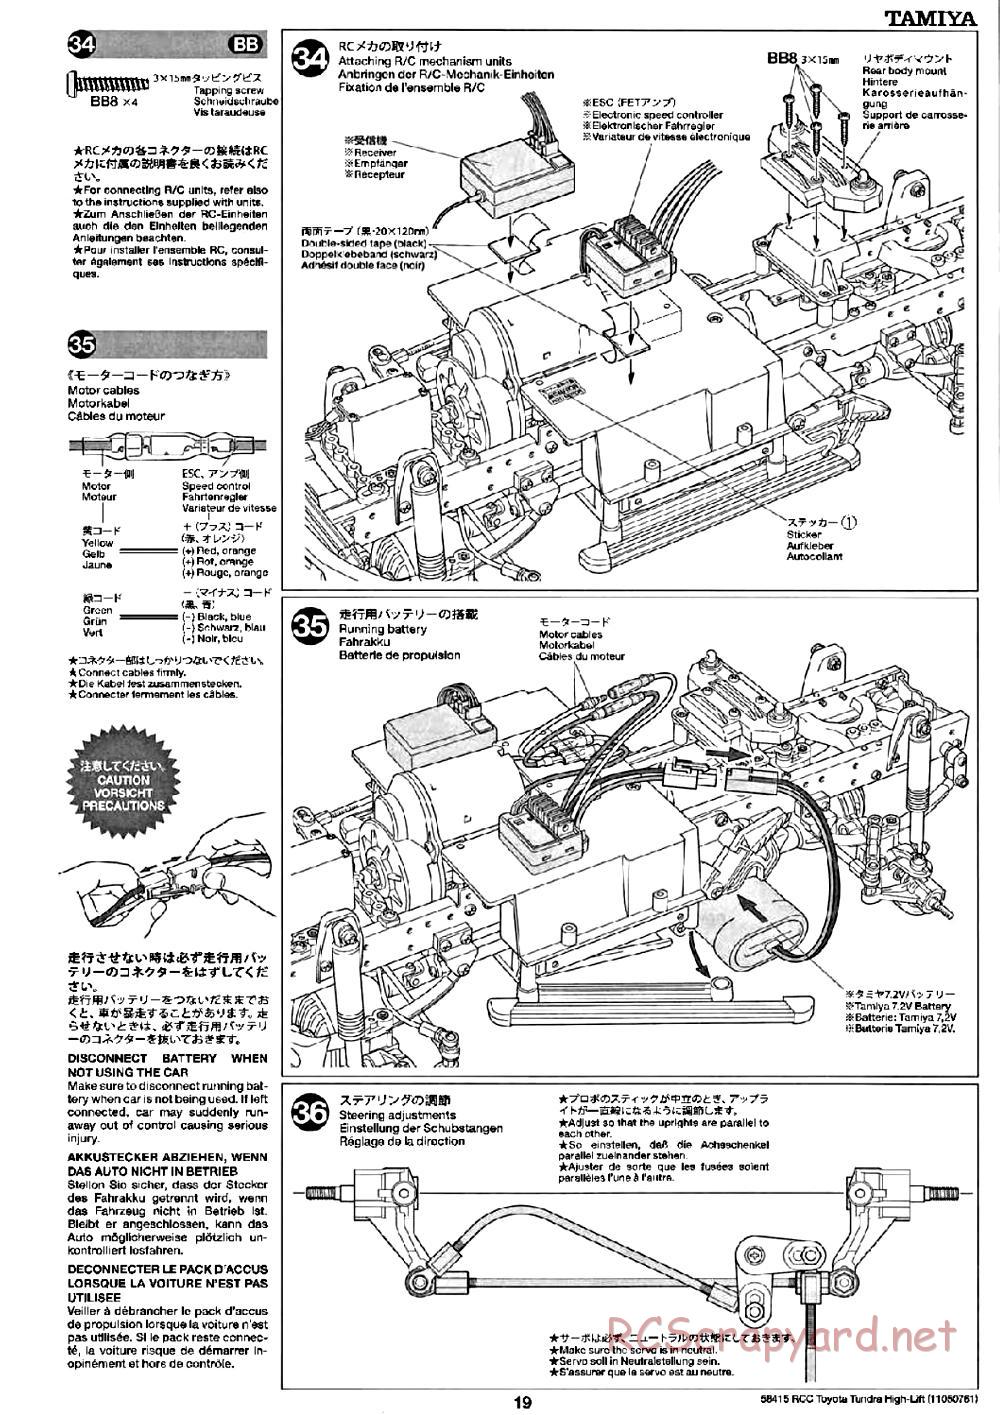 Tamiya - Toyota Tundra High-Lift Chassis - Manual - Page 19